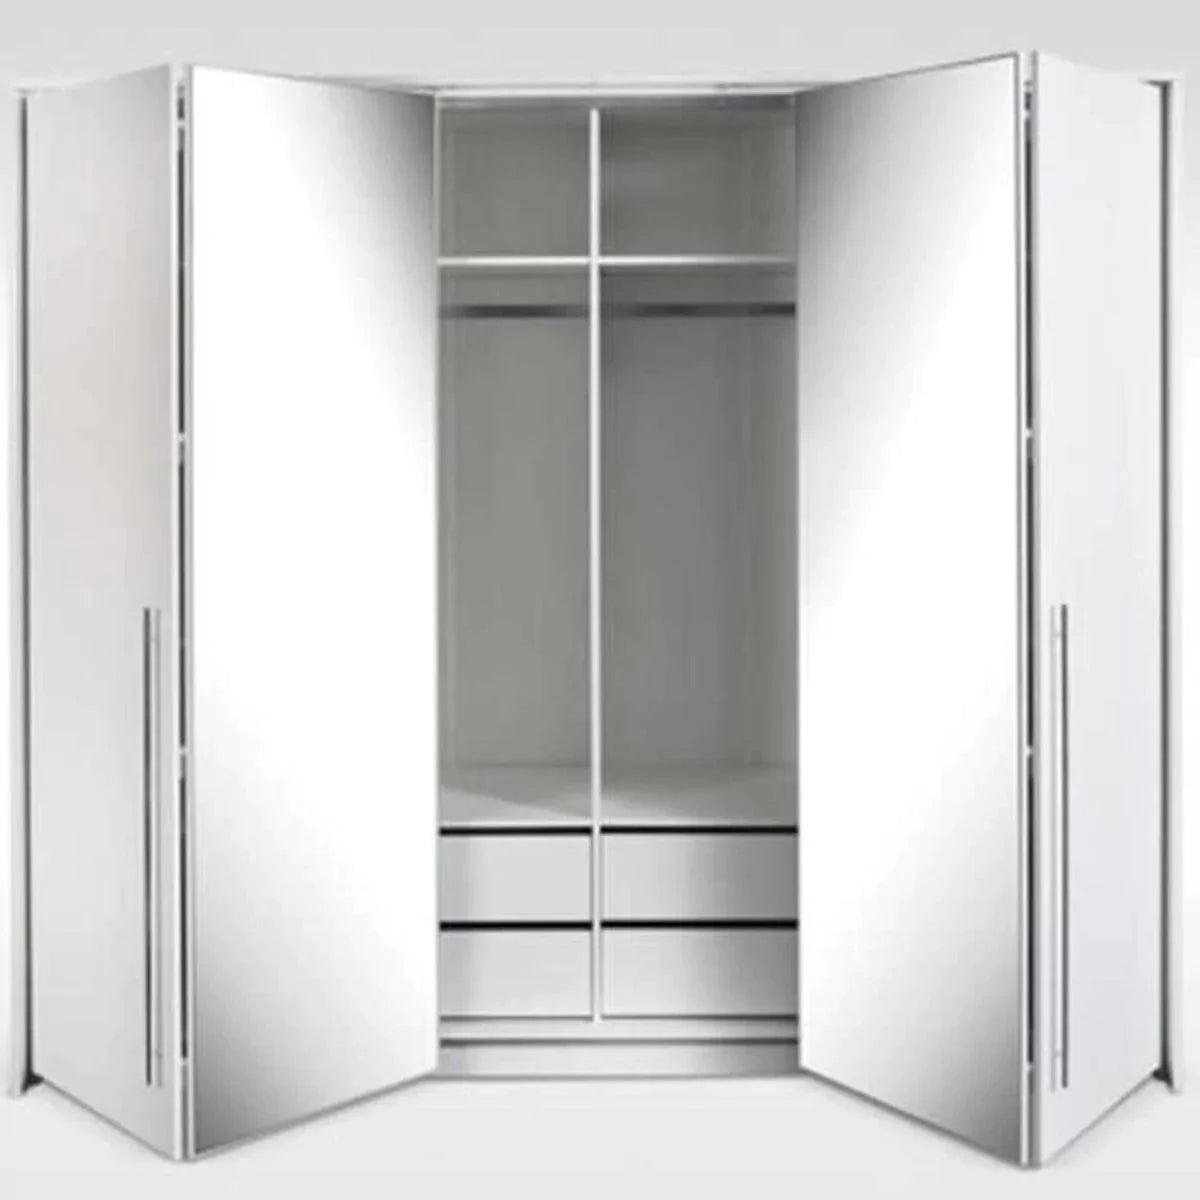 Kirklees Swinging Doors Wardrobe with Mirror - 256 White